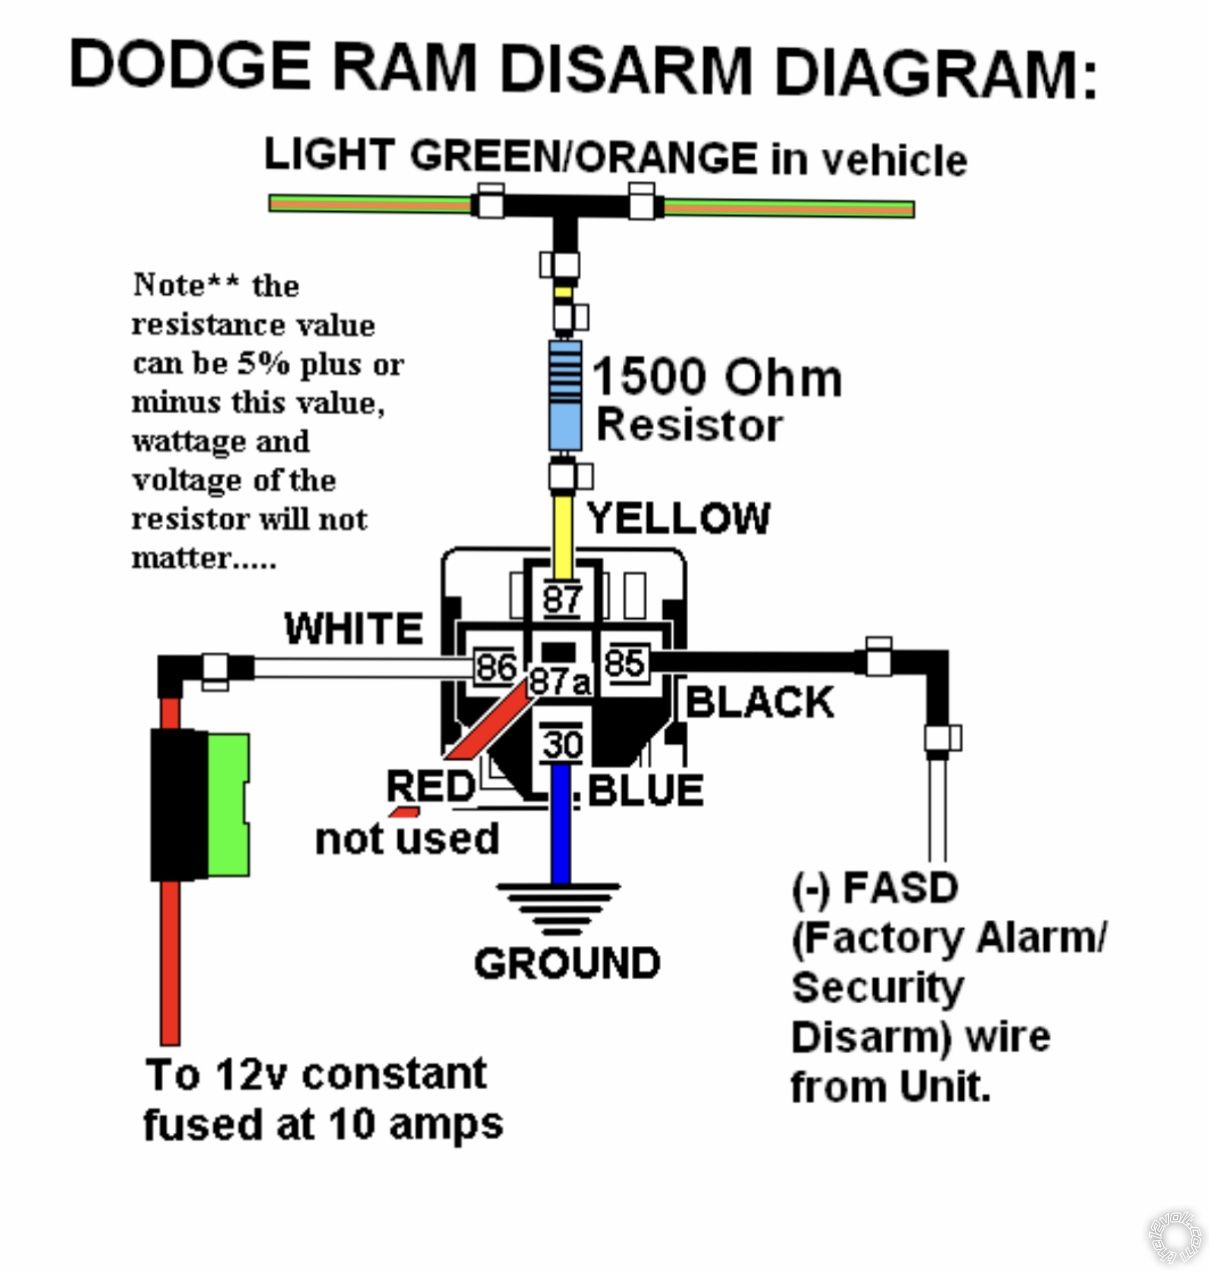 Boa 265B Remote Start Not Starting, 2001 Dodge Ram -- posted image.